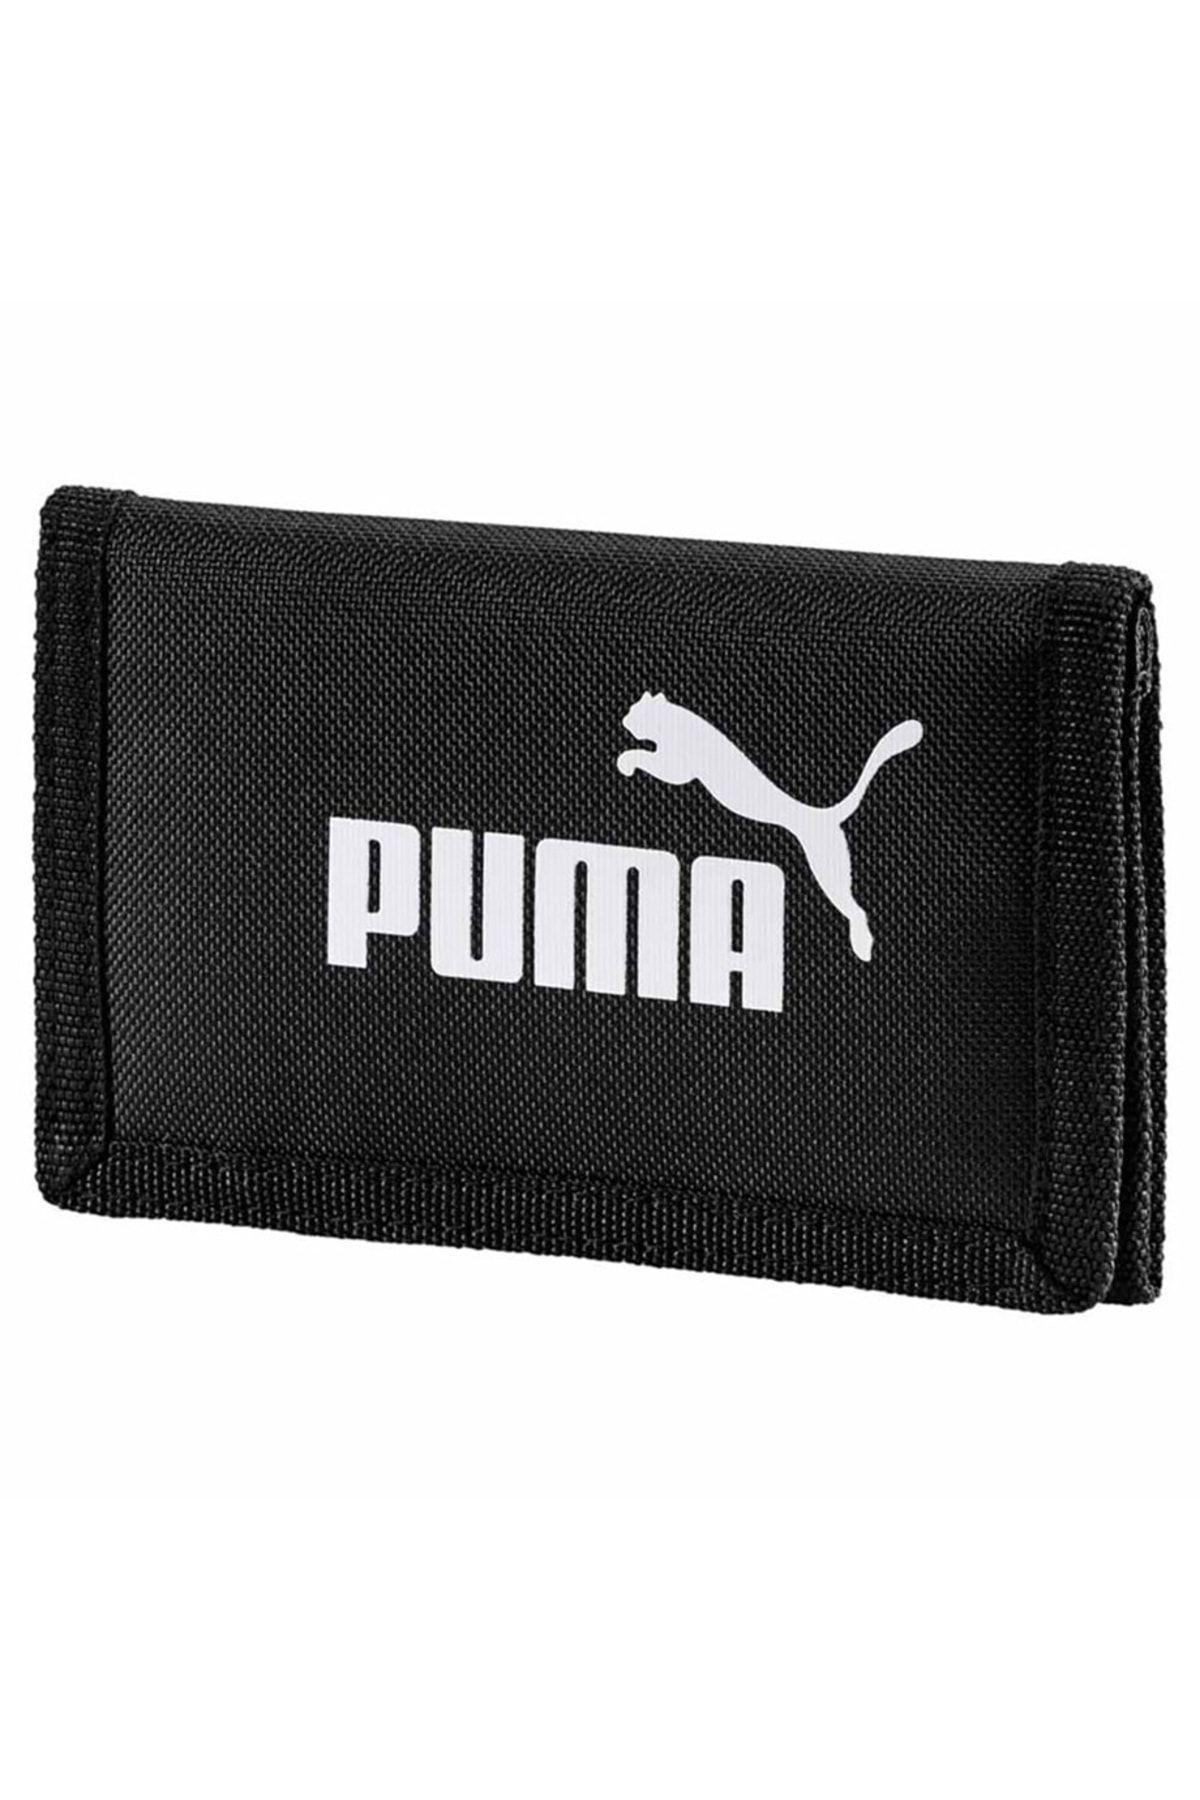 Puma Phase Aop Wallet Black-logo Ao